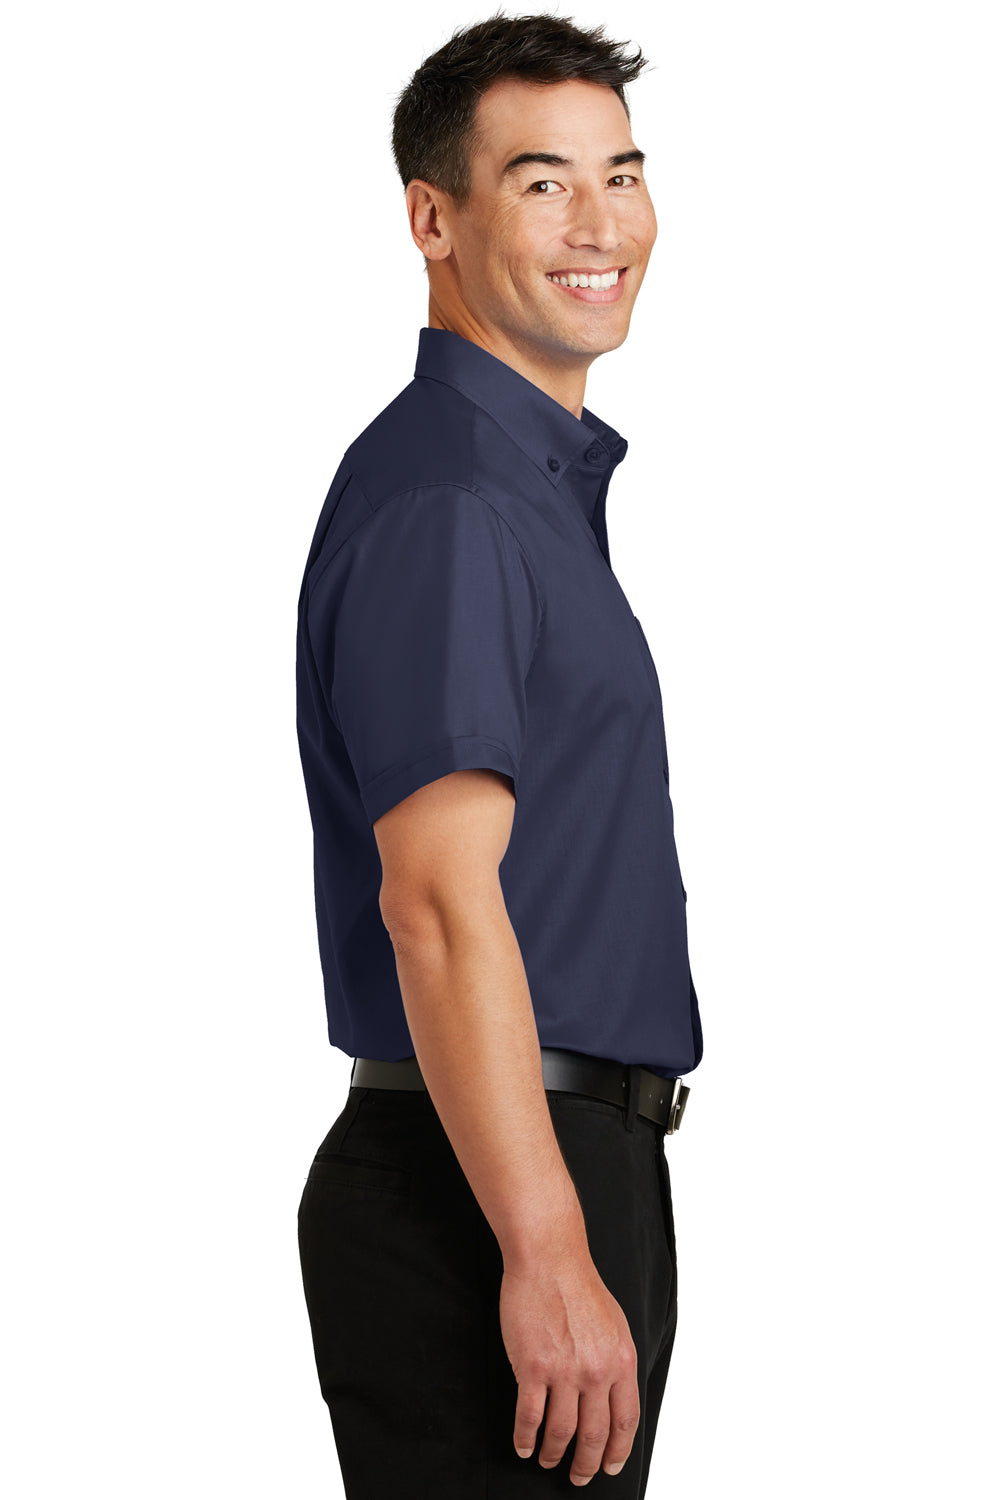 Port Authority S664 Mens SuperPro Wrinkle Resistant Short Sleeve Button Down Shirt w/ Pocket Navy Blue Side